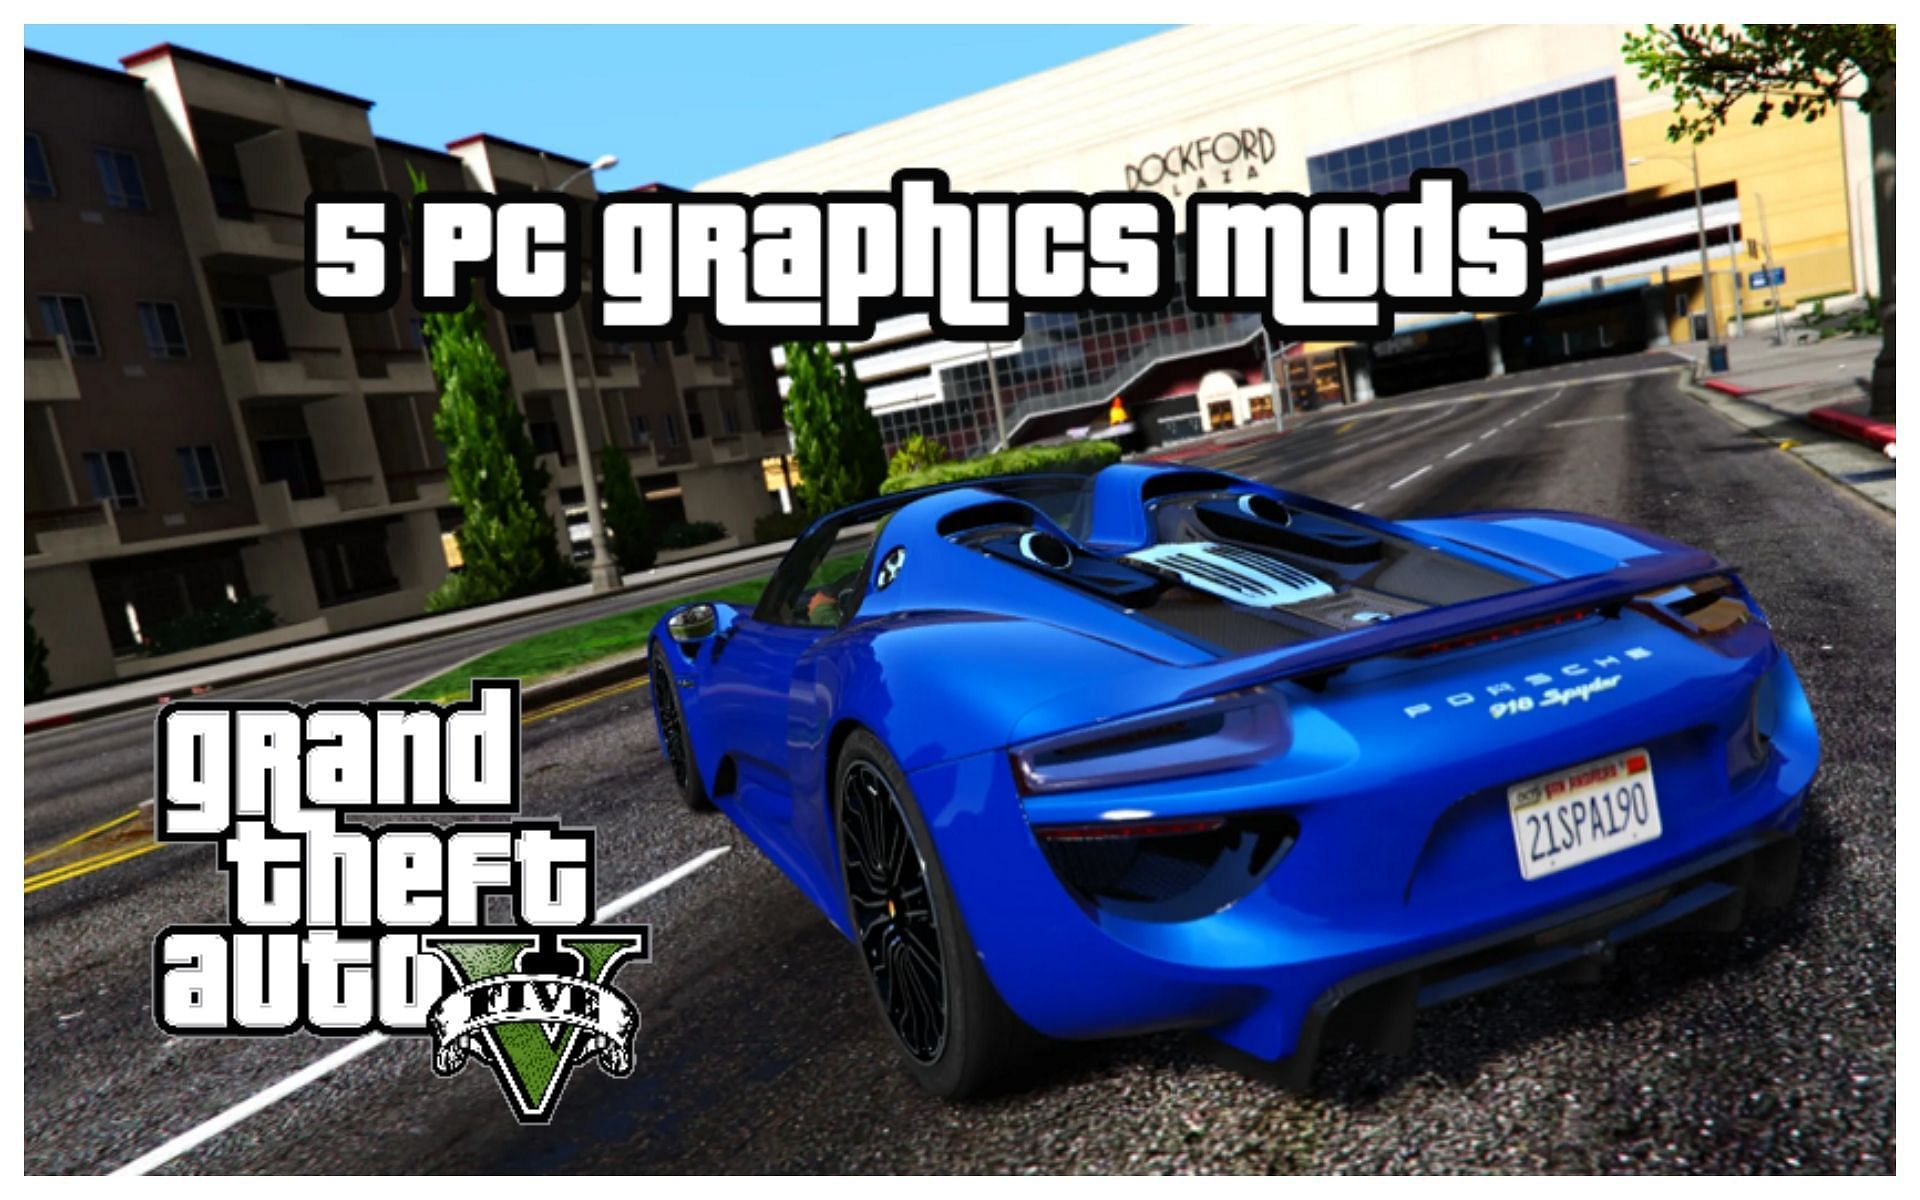 7 GTA 5 mods that enhances graphics on PC, ranked